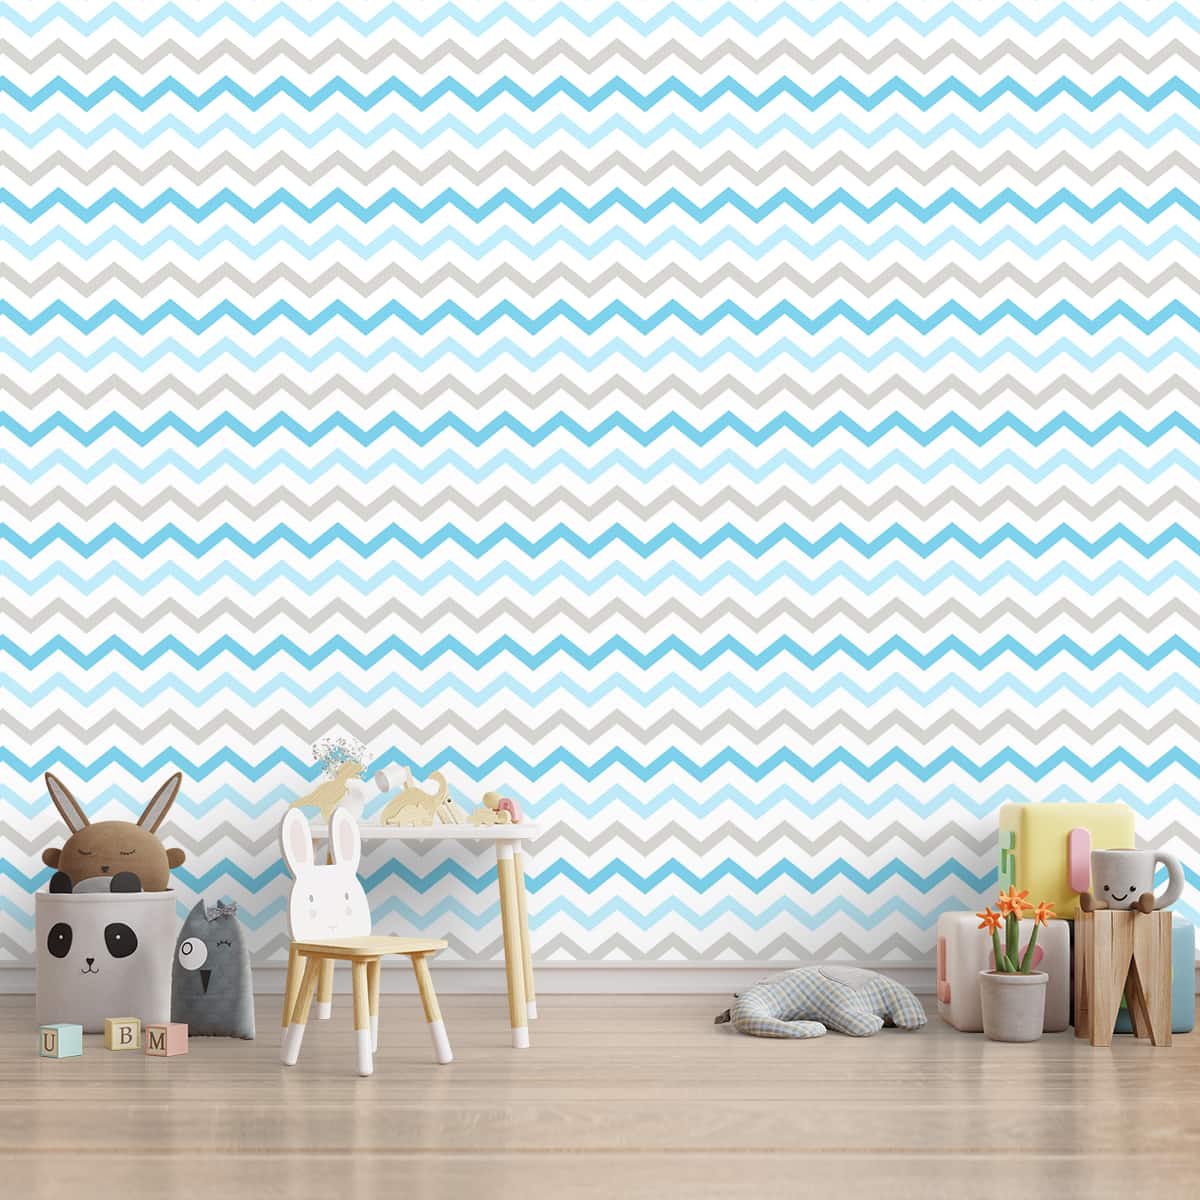 Blue and Grey Chevron Wallpaper for Kids Room, Customised Design